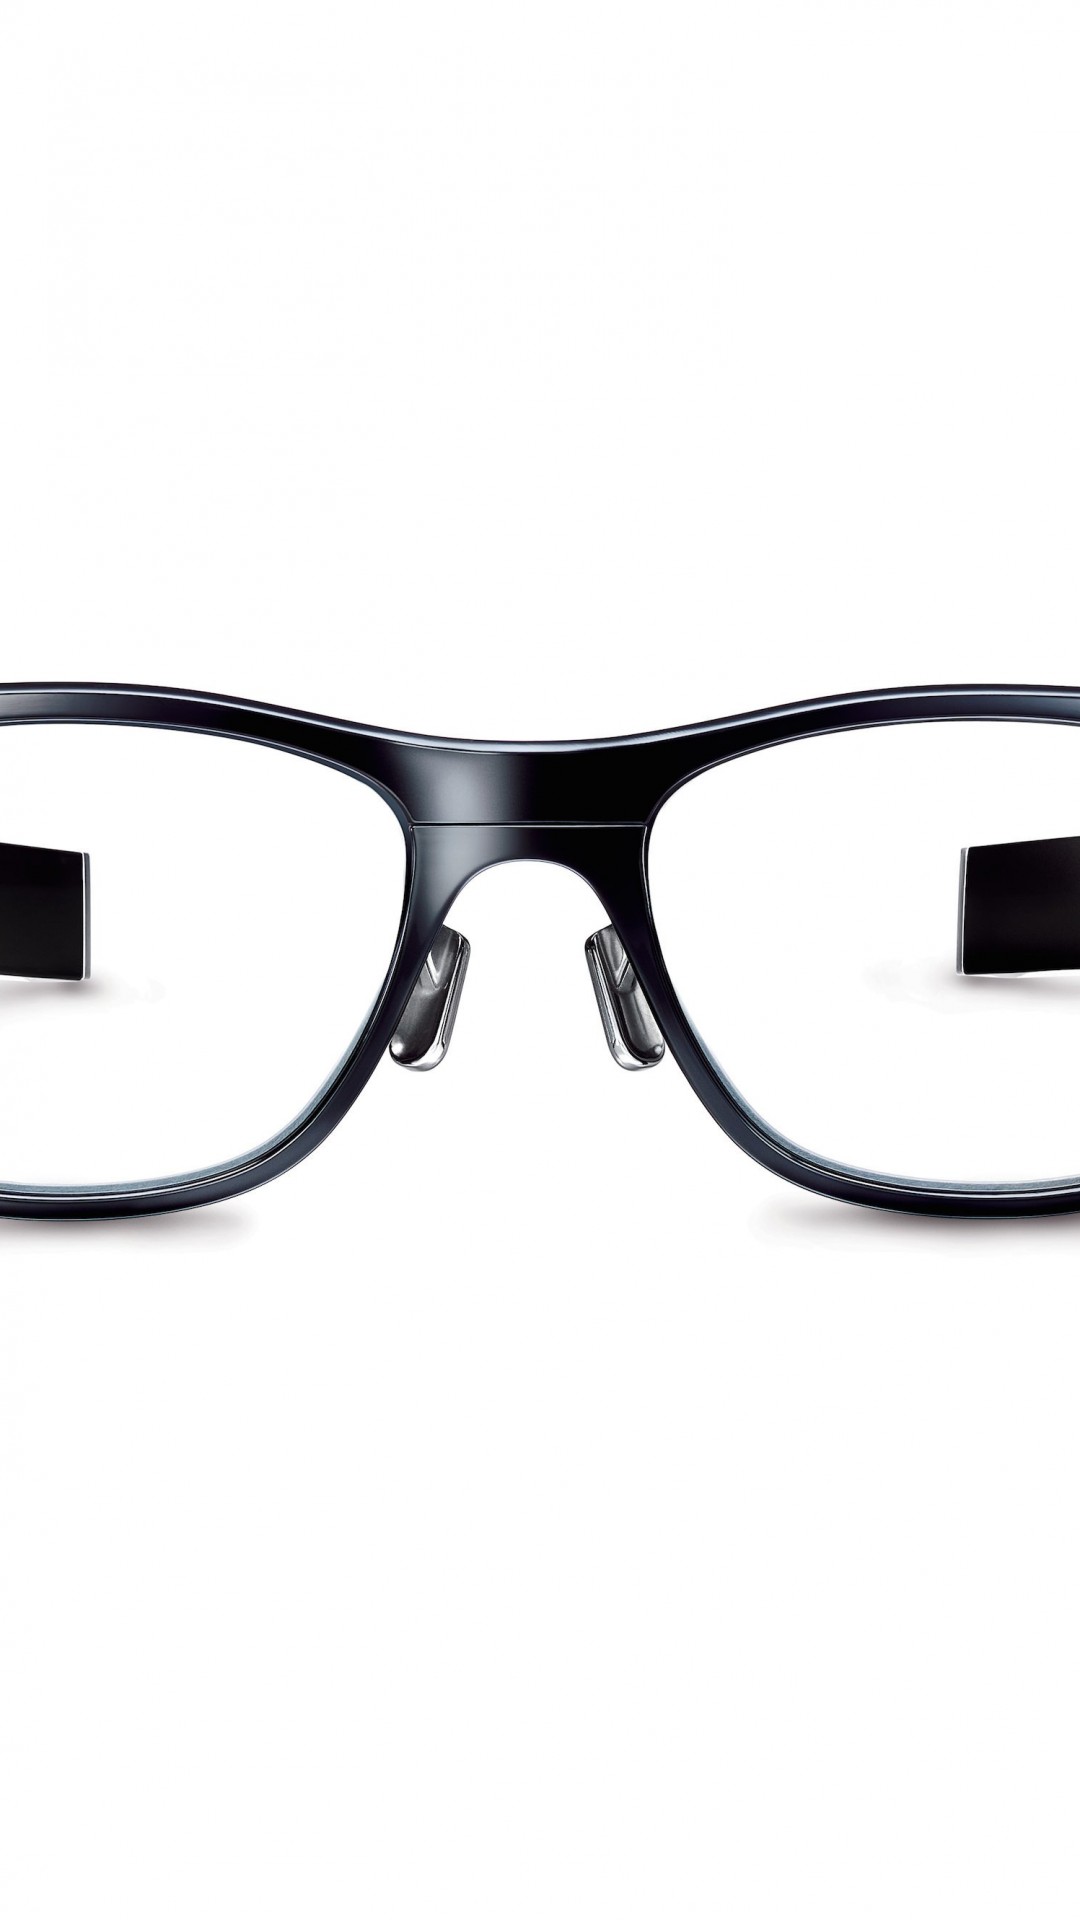 Jins Meme Smart Glasses Wallpaper for SONY Xperia Z1